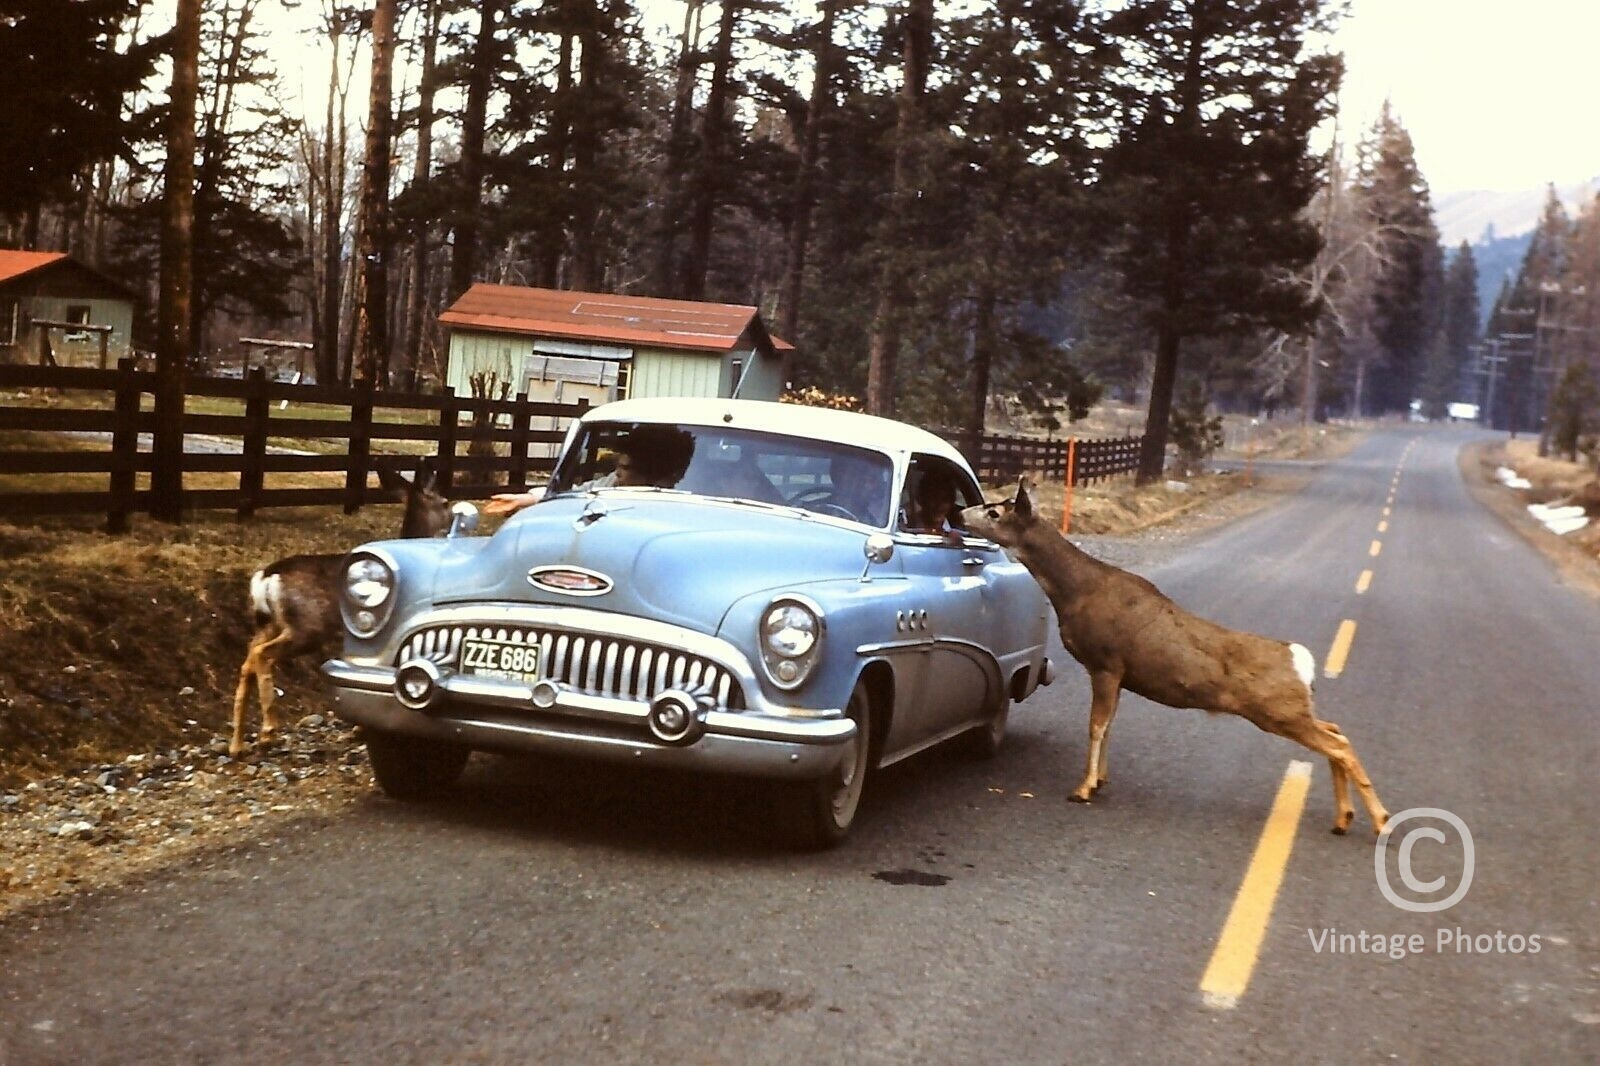 1950s Classic Car from Washington feeding the Deer